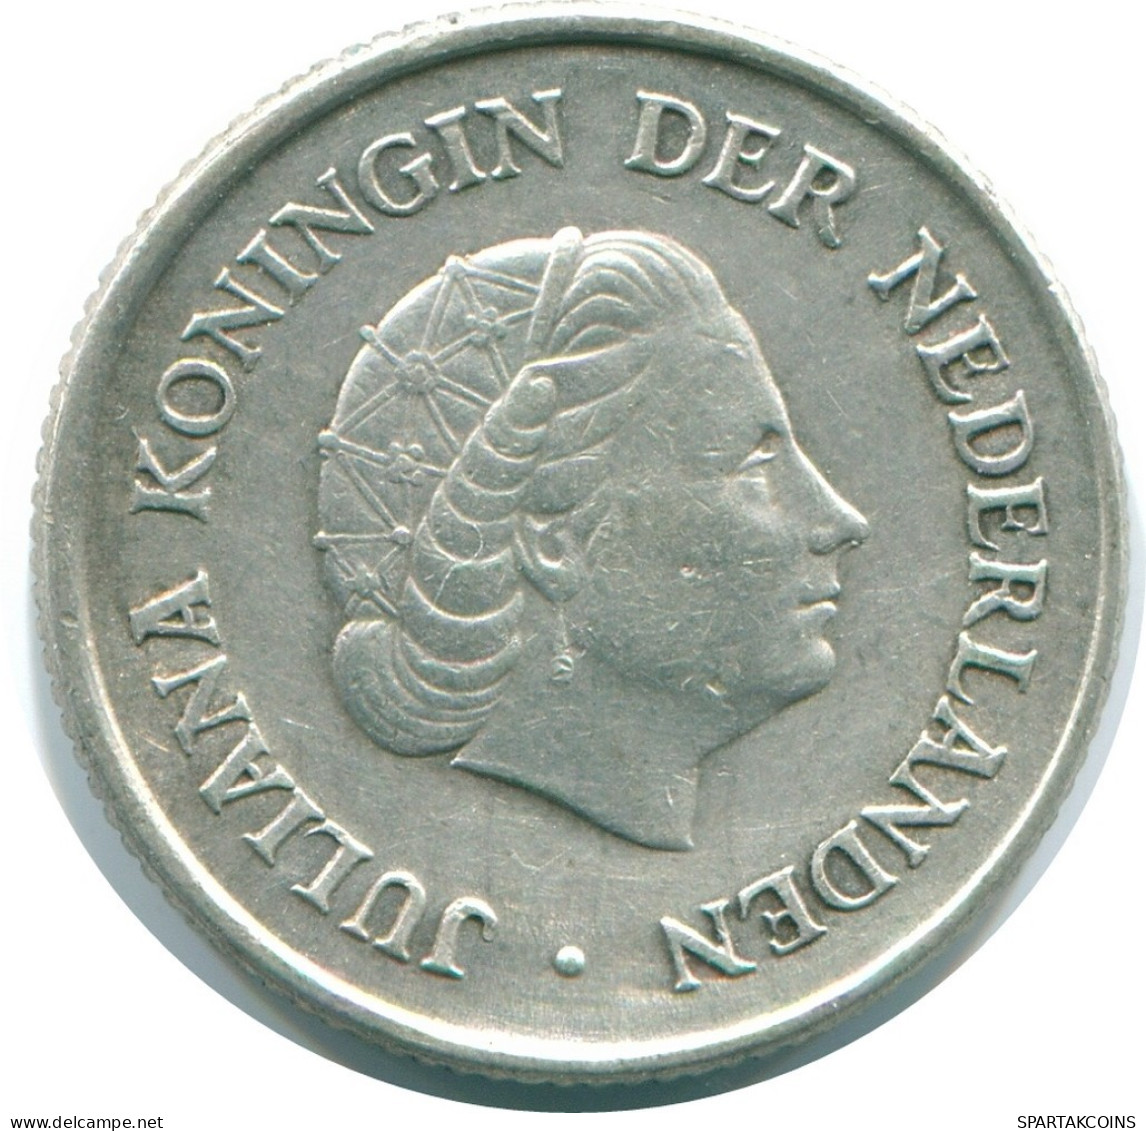 1/4 GULDEN 1970 NETHERLANDS ANTILLES SILVER Colonial Coin #NL11623.4.U.A - Netherlands Antilles